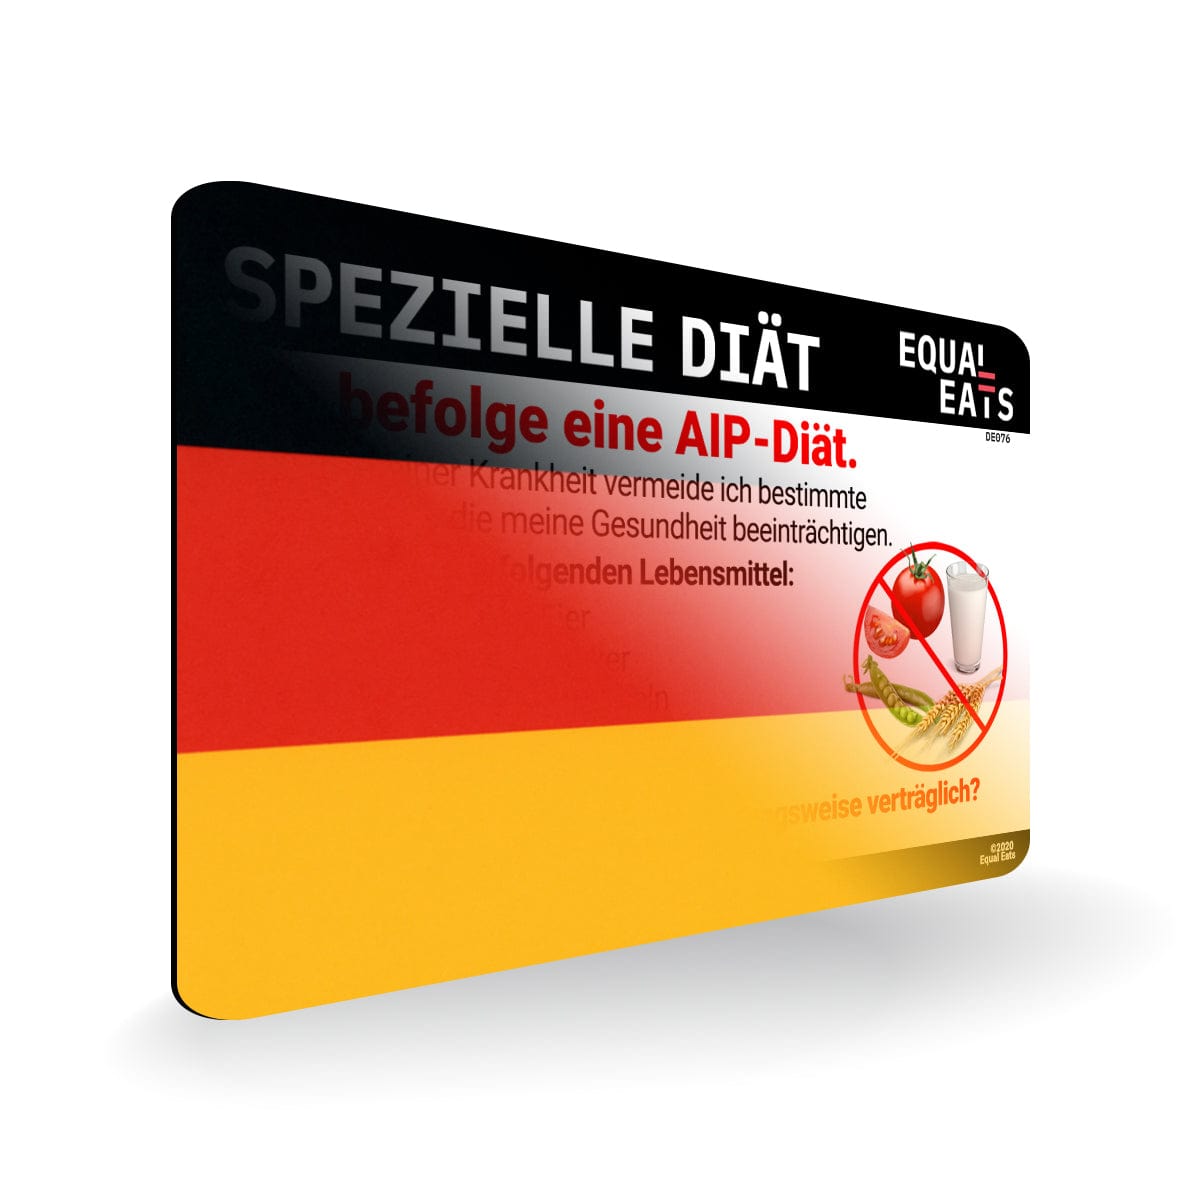 AIP Diet in German. AIP Diet Card for Germany